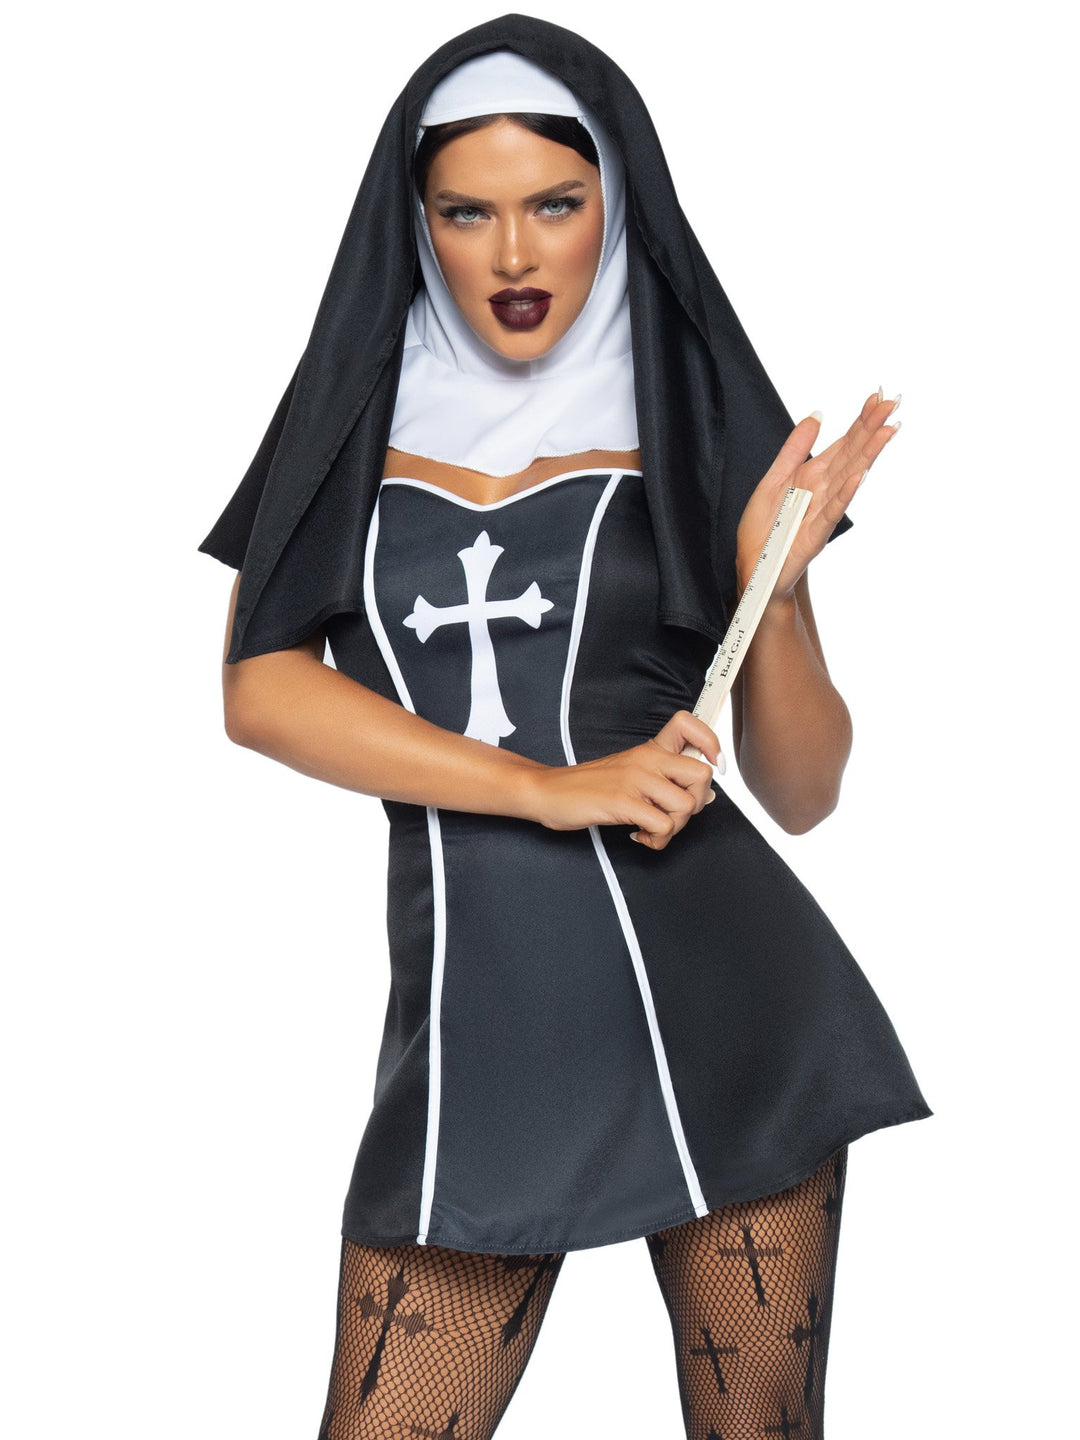 Naughty Nun Mini Dress with Cross Accent and Nun Habit